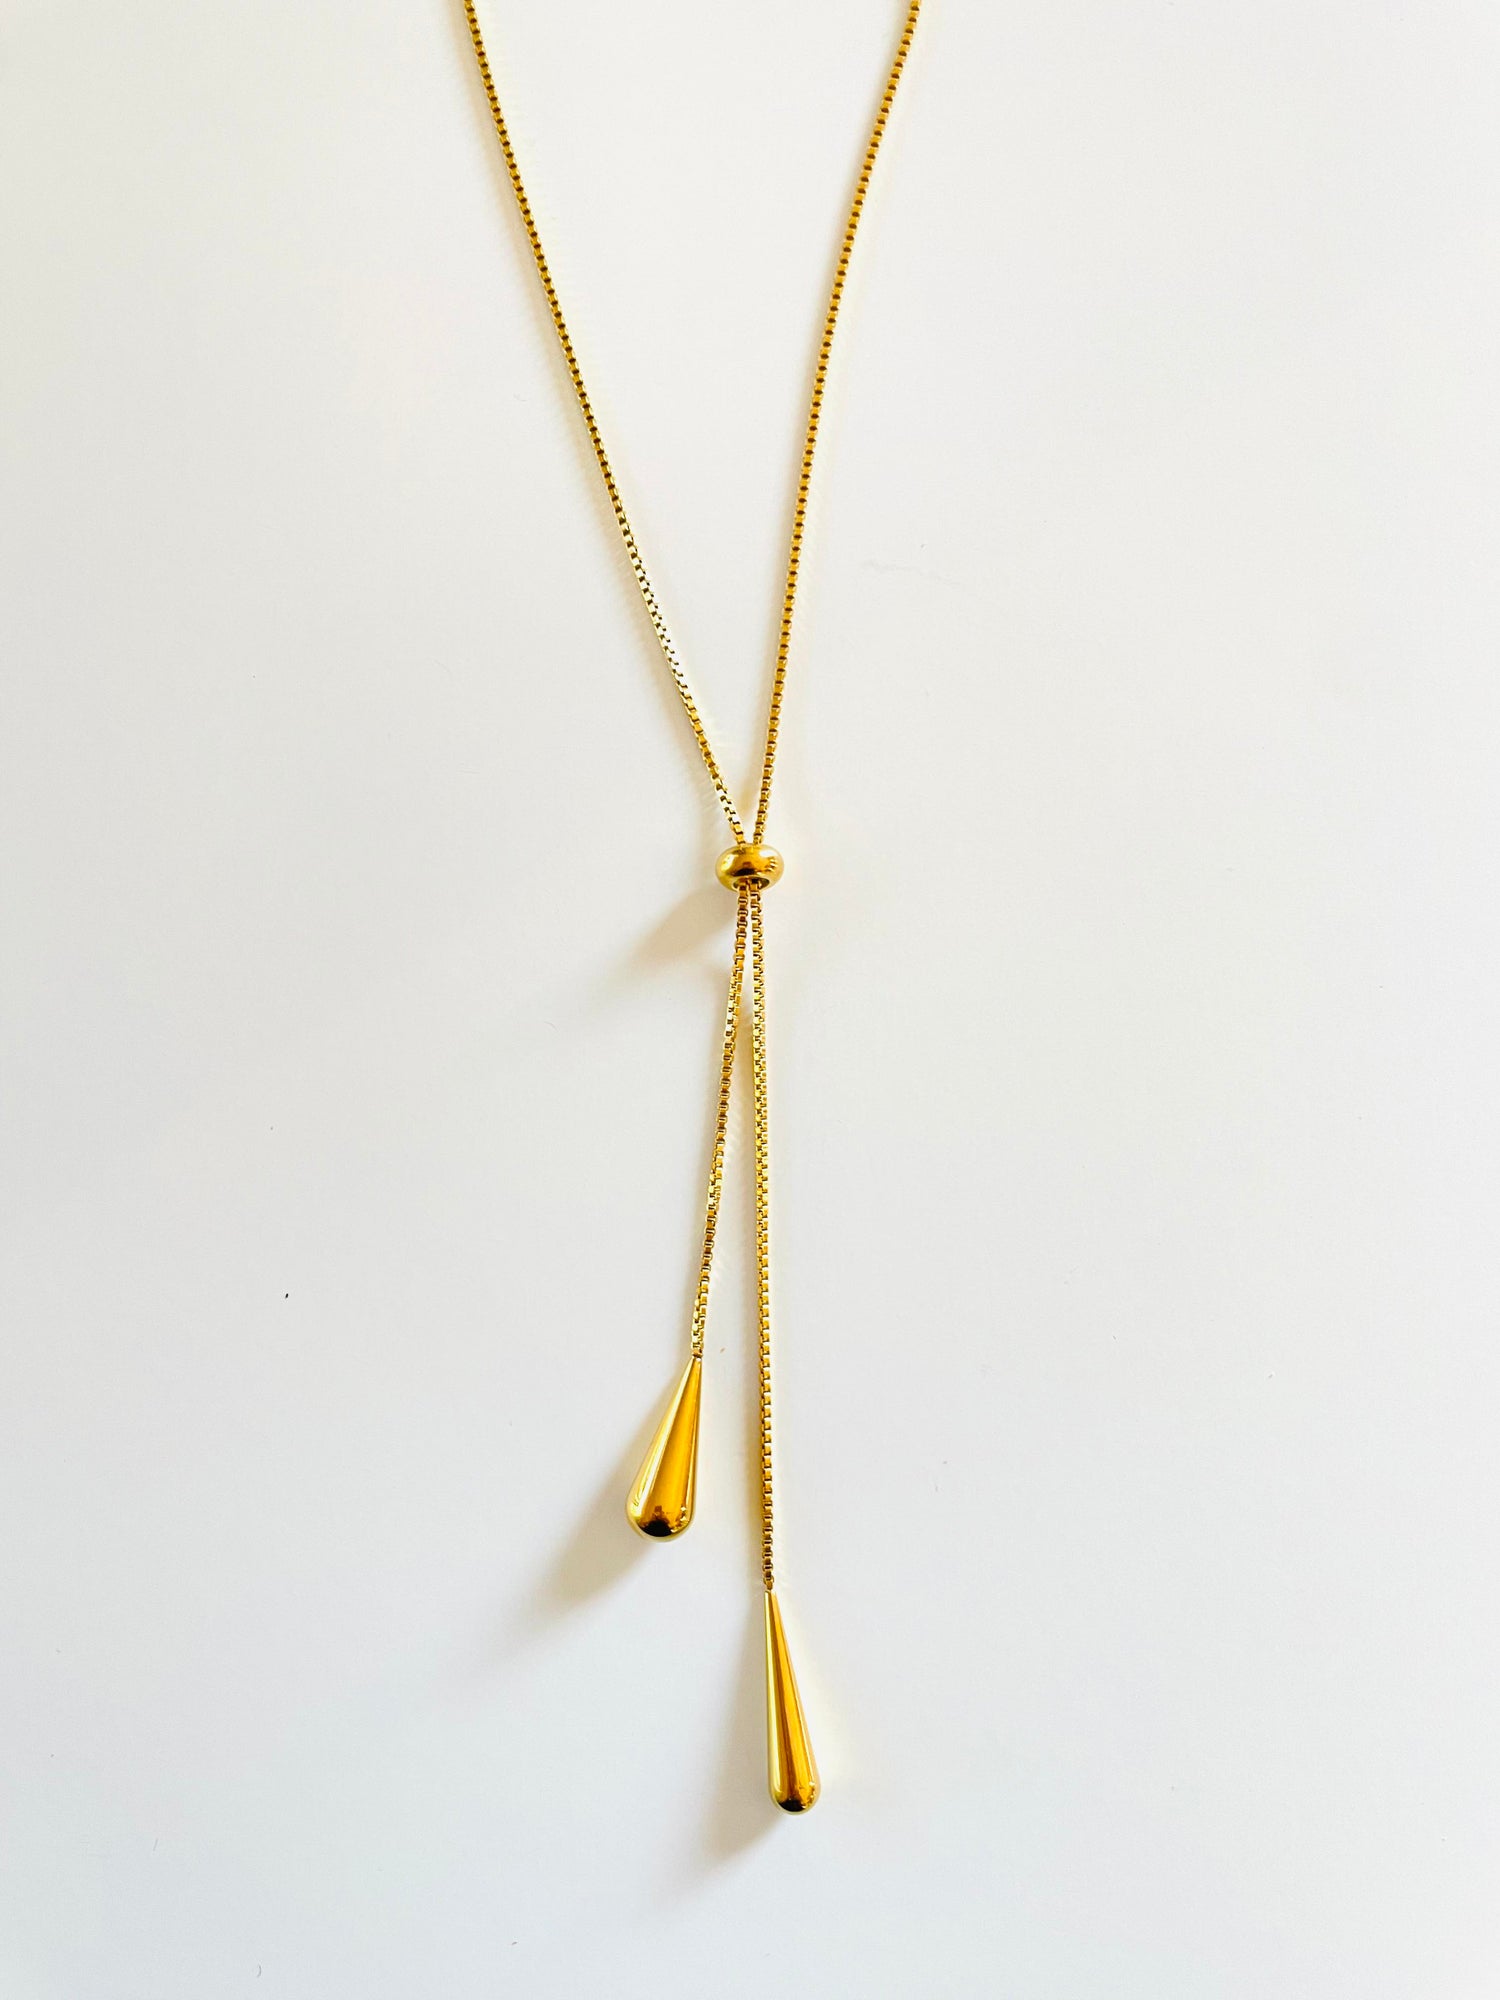 Teardrop Adjustable Lariat Necklace - GOLD or SILVER  {Waterproof Jewelry!}